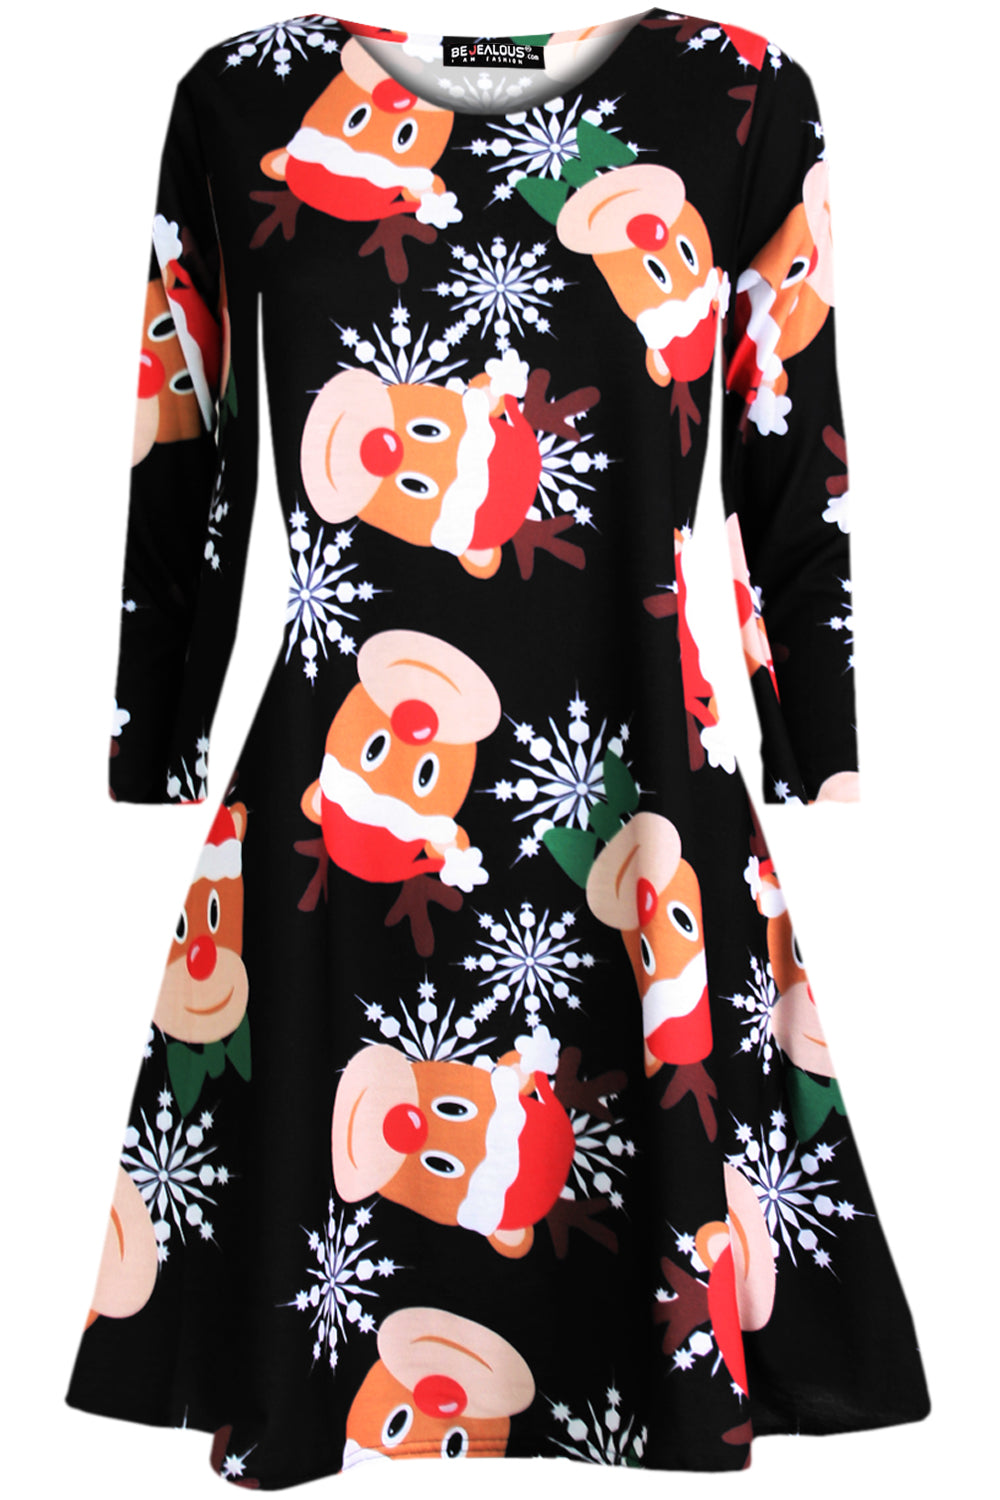 Ruby Long Sleeve Christmas Print Dress